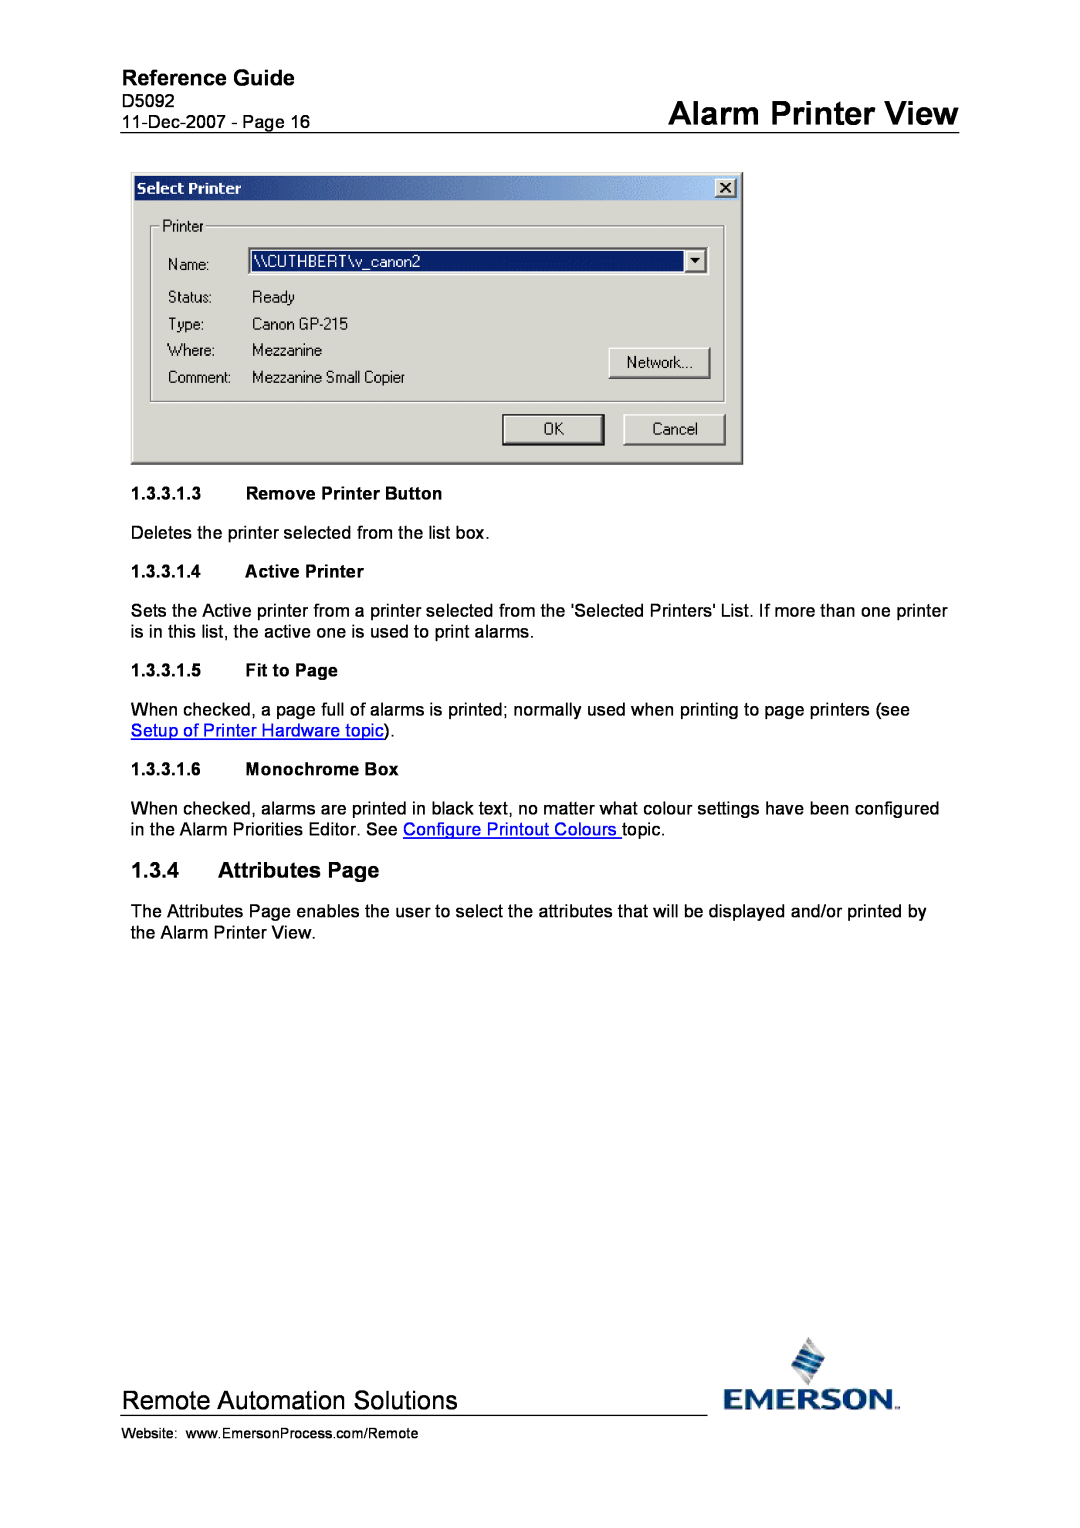 Emerson Process Management D5092 manual Attributes Page, Remove Printer Button, Active Printer, Fit to Page, Monochrome Box 